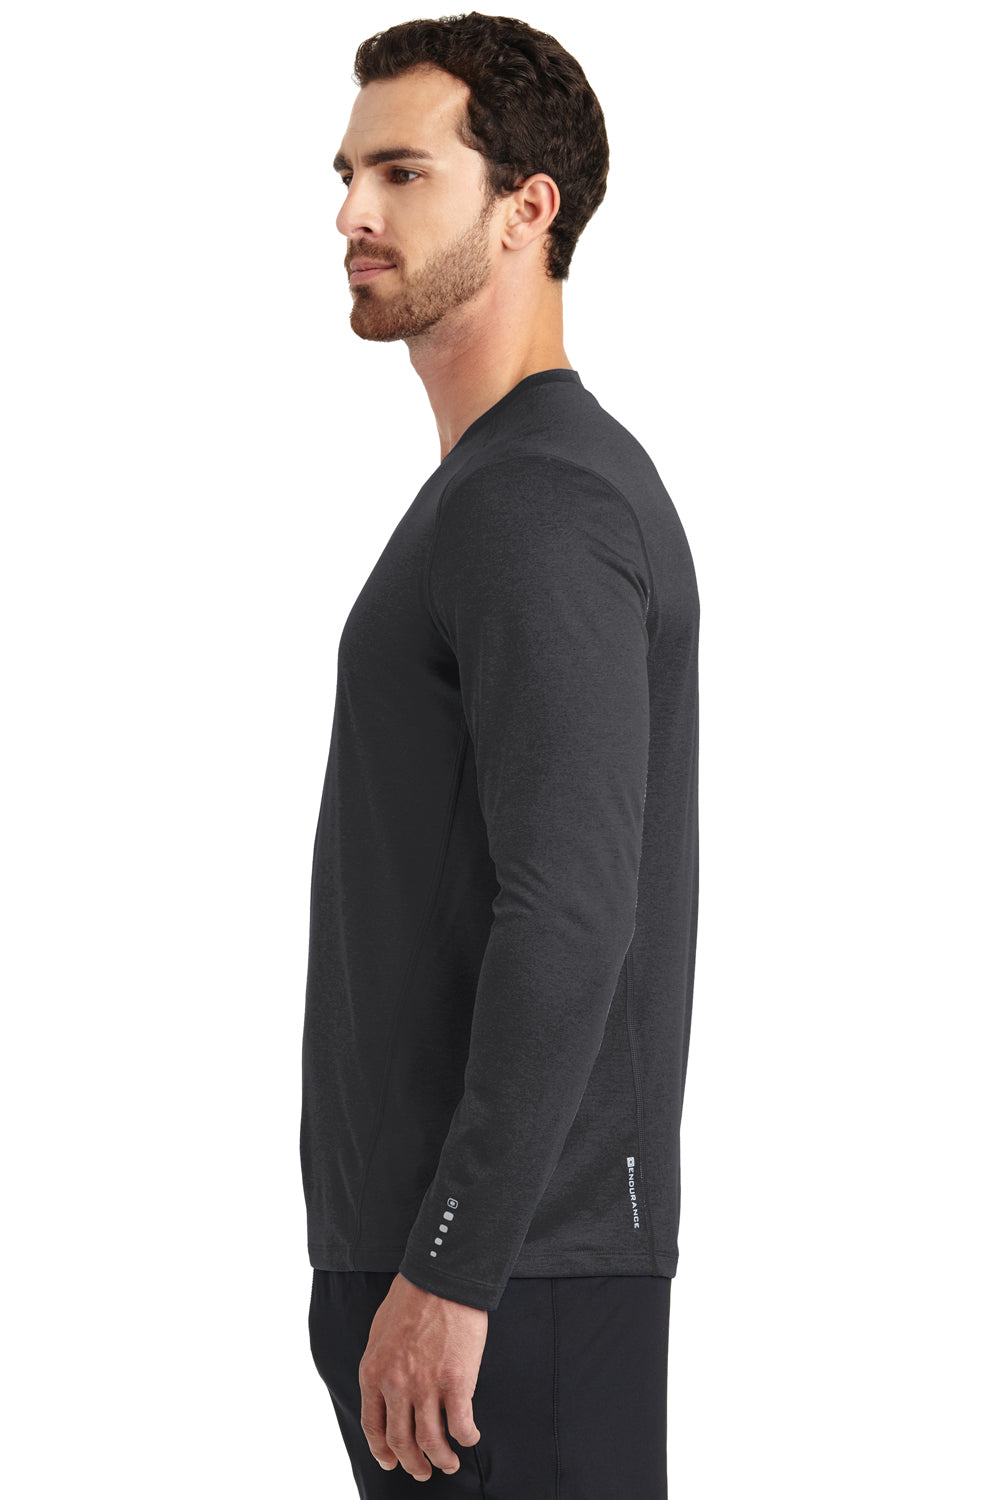 Ogio OE321 Mens Endurance Pulse Jersey Moisture Wicking Long Sleeve Crewneck T-Shirt Black Side